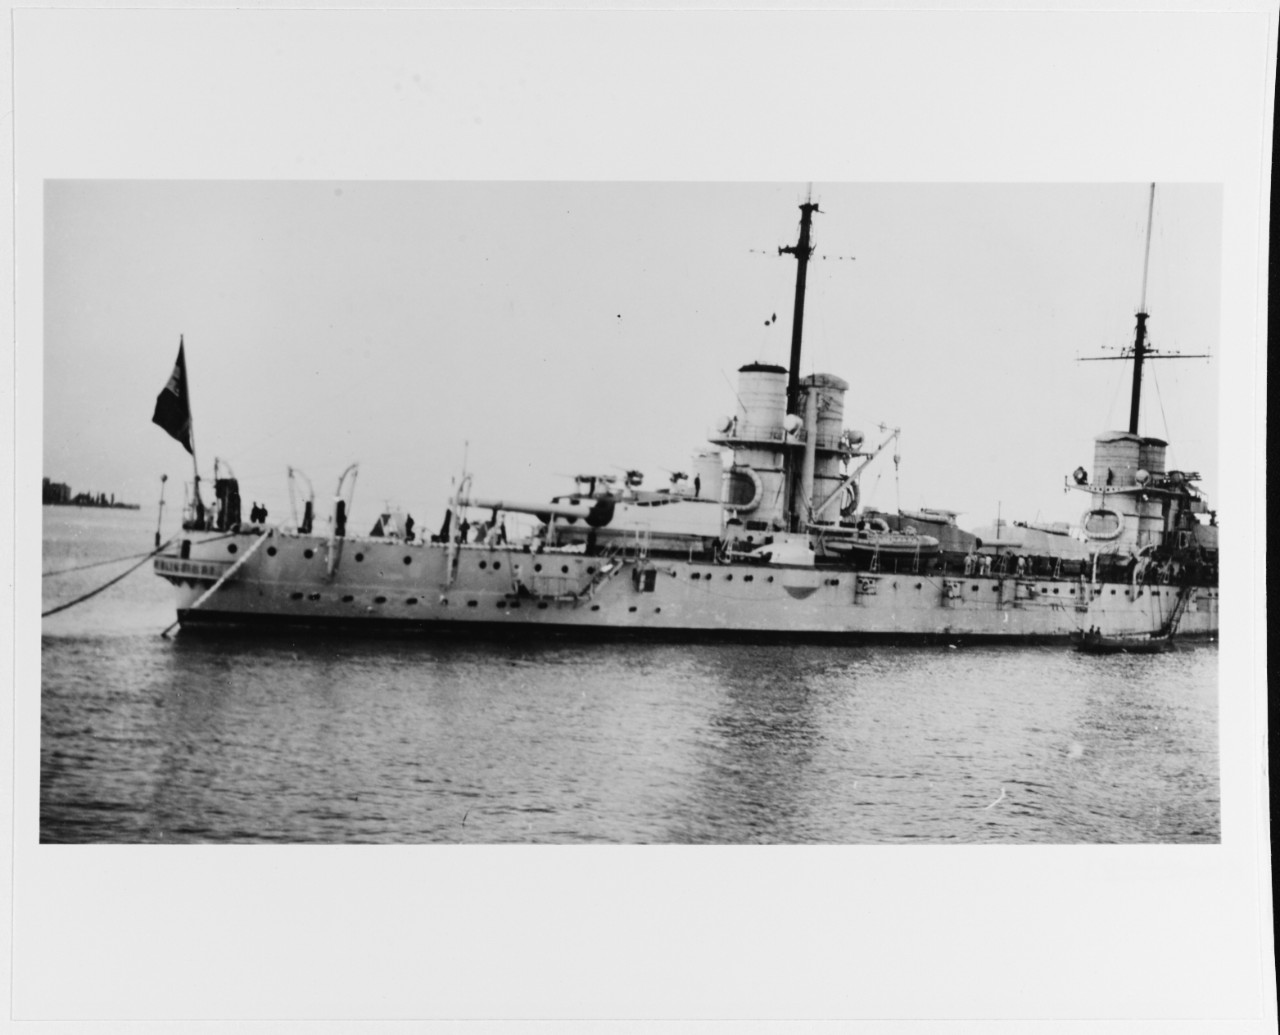 DANTE ALIGHIERI (Italian battleship, 1910-1928)